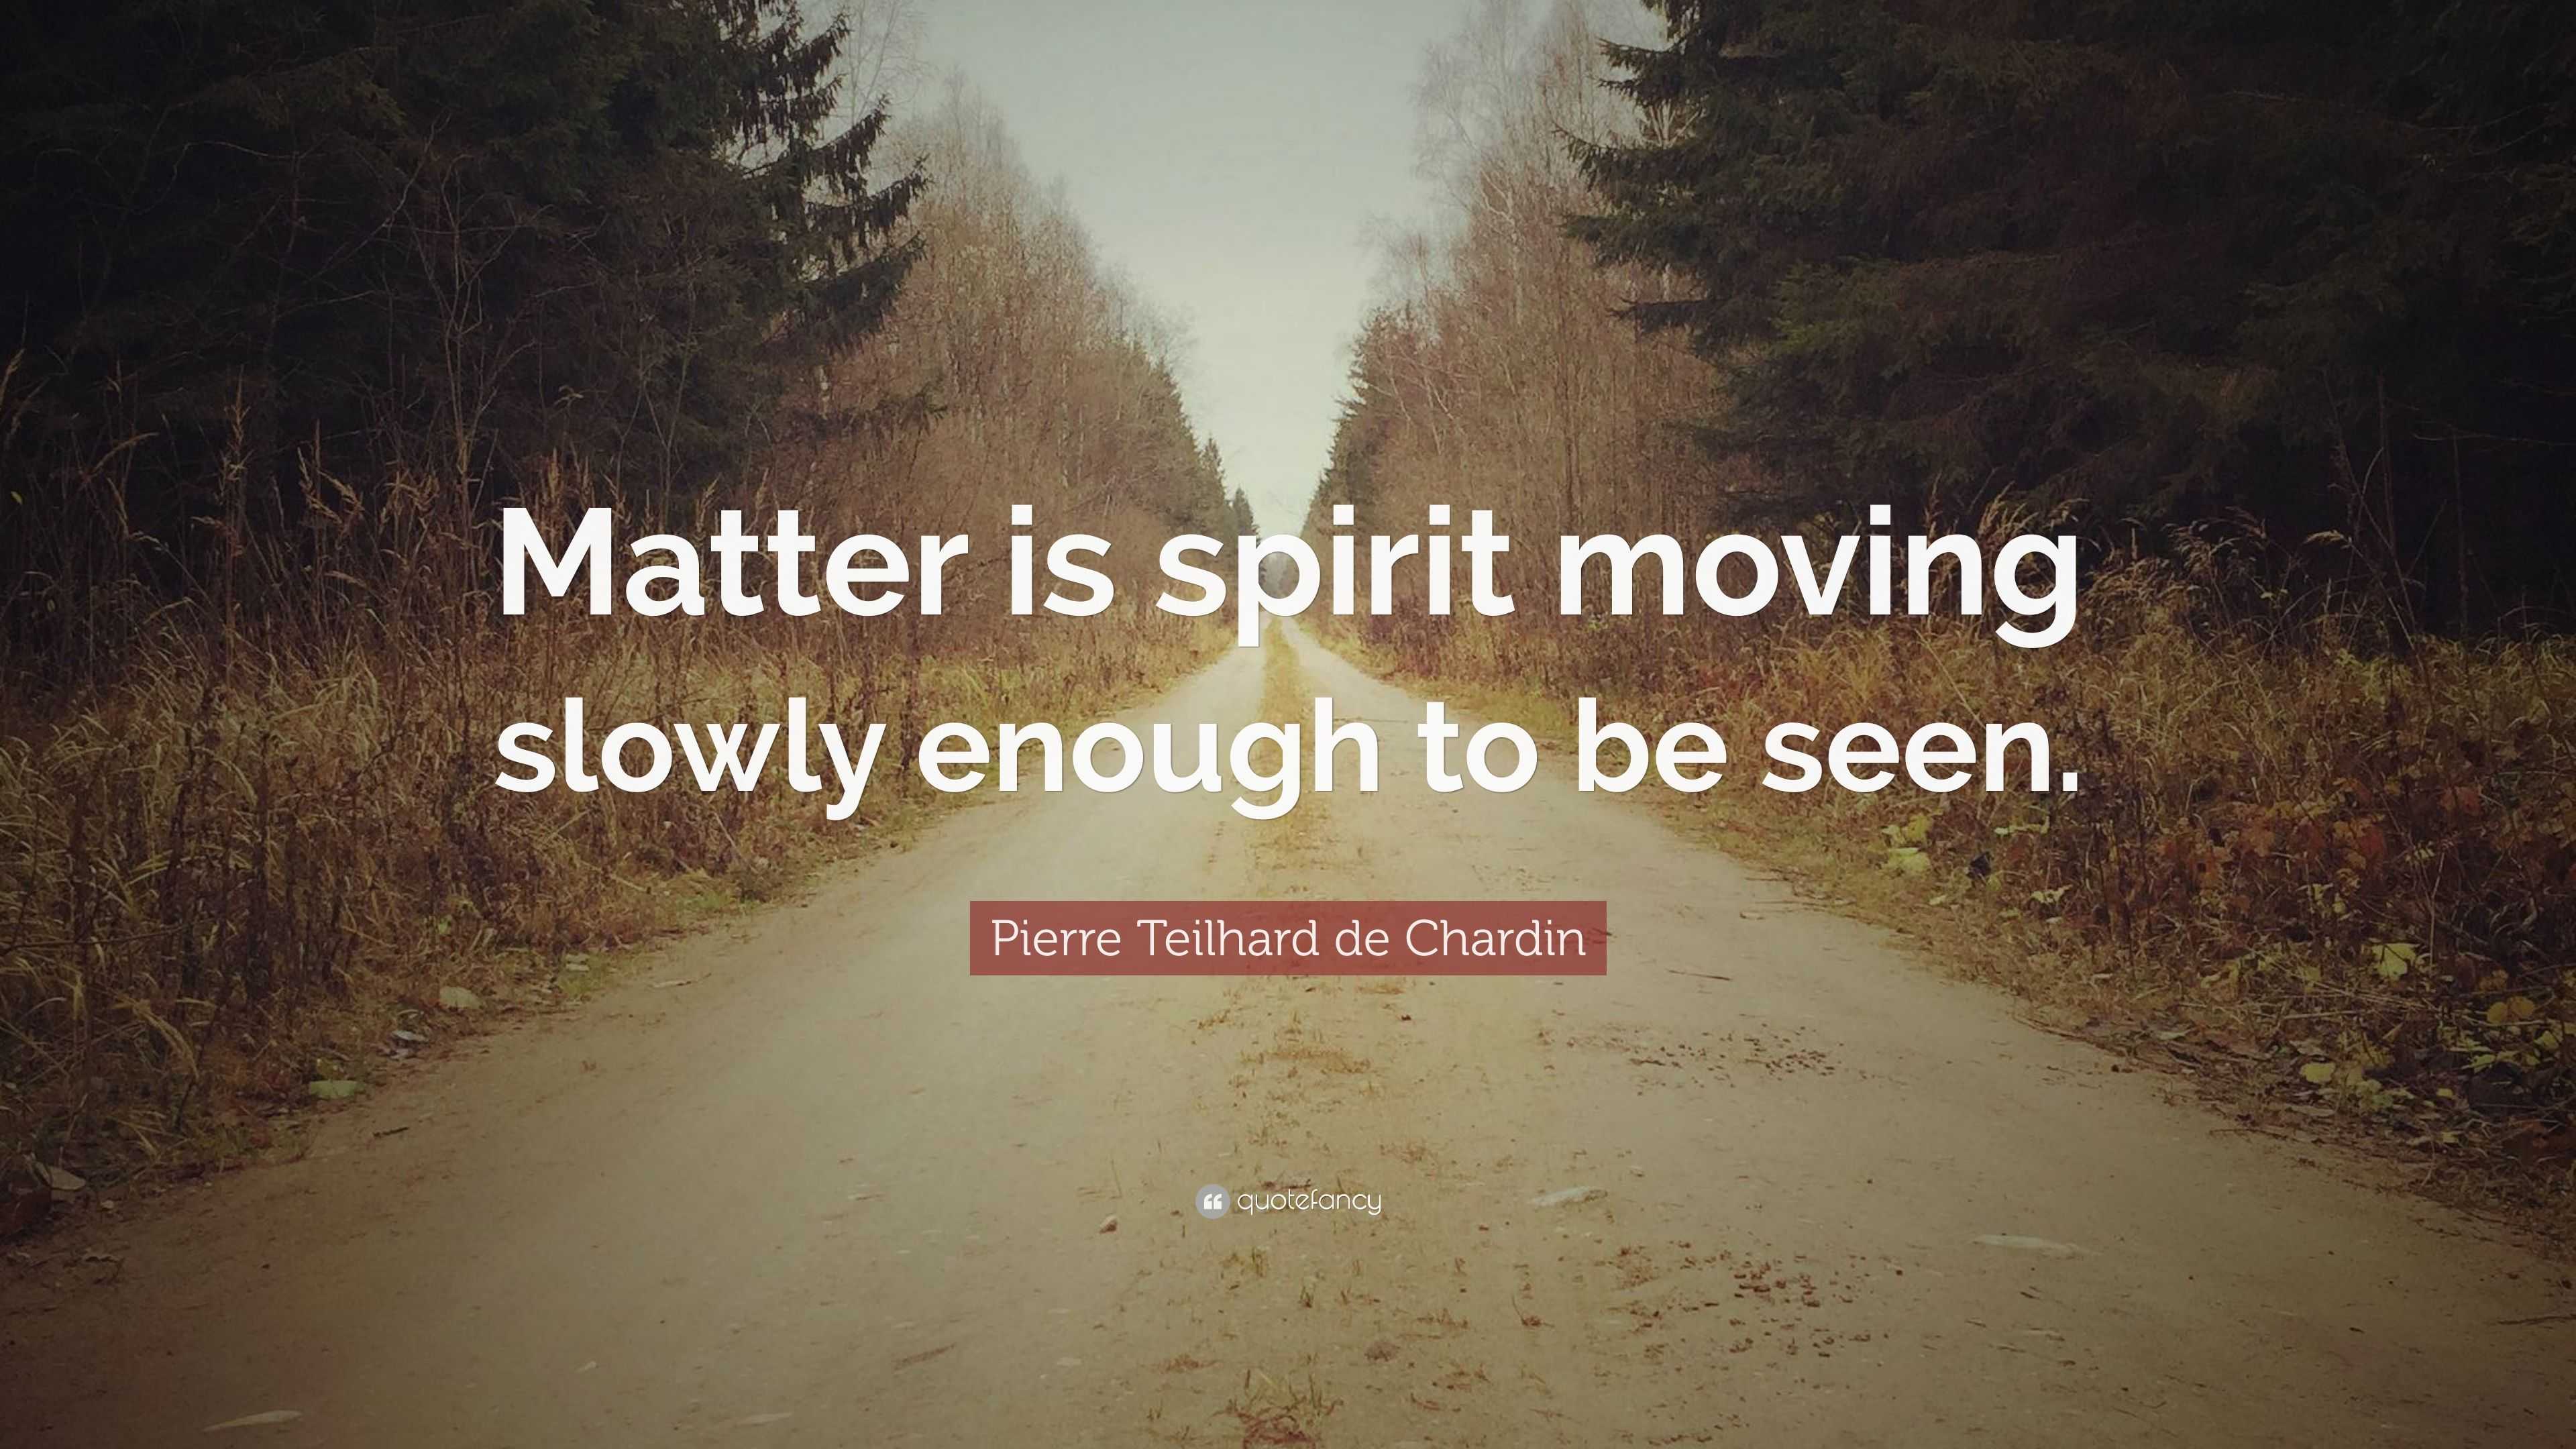 4756739 Pierre Teilhard de Chardin Quote Matter is spirit moving slowly